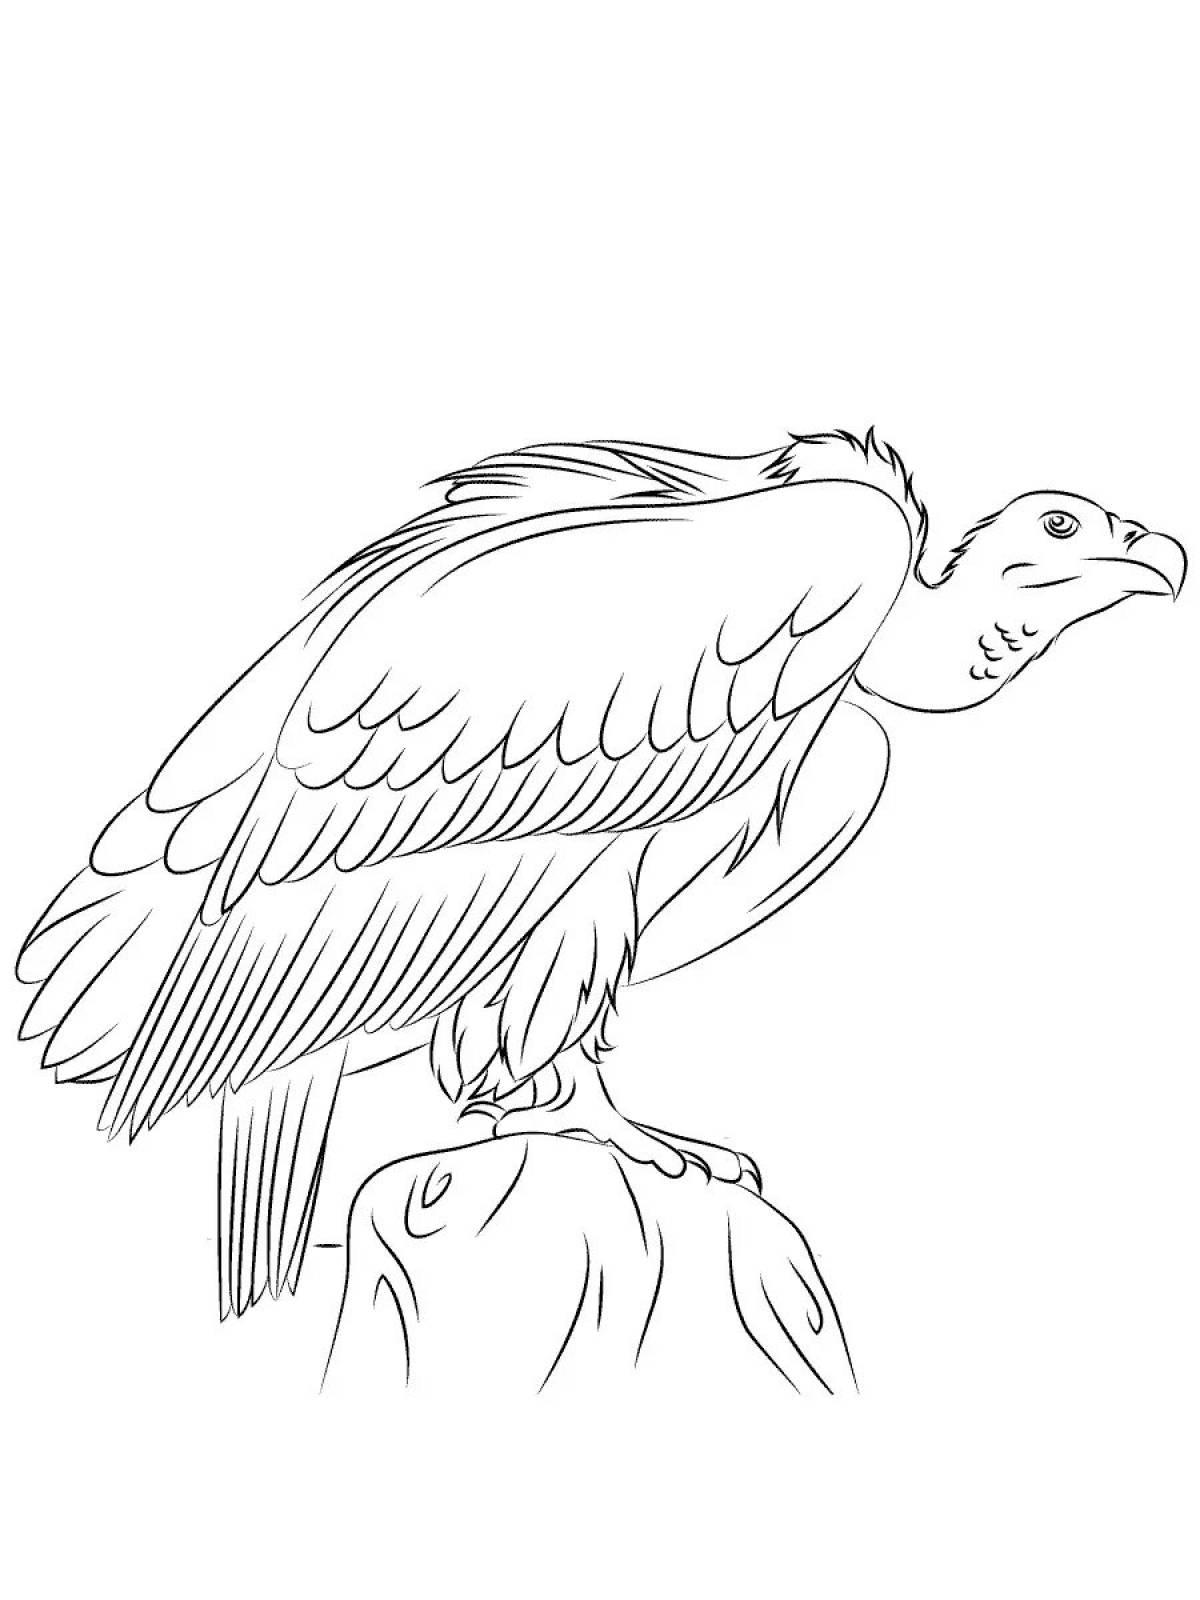 Colouring serene vulture